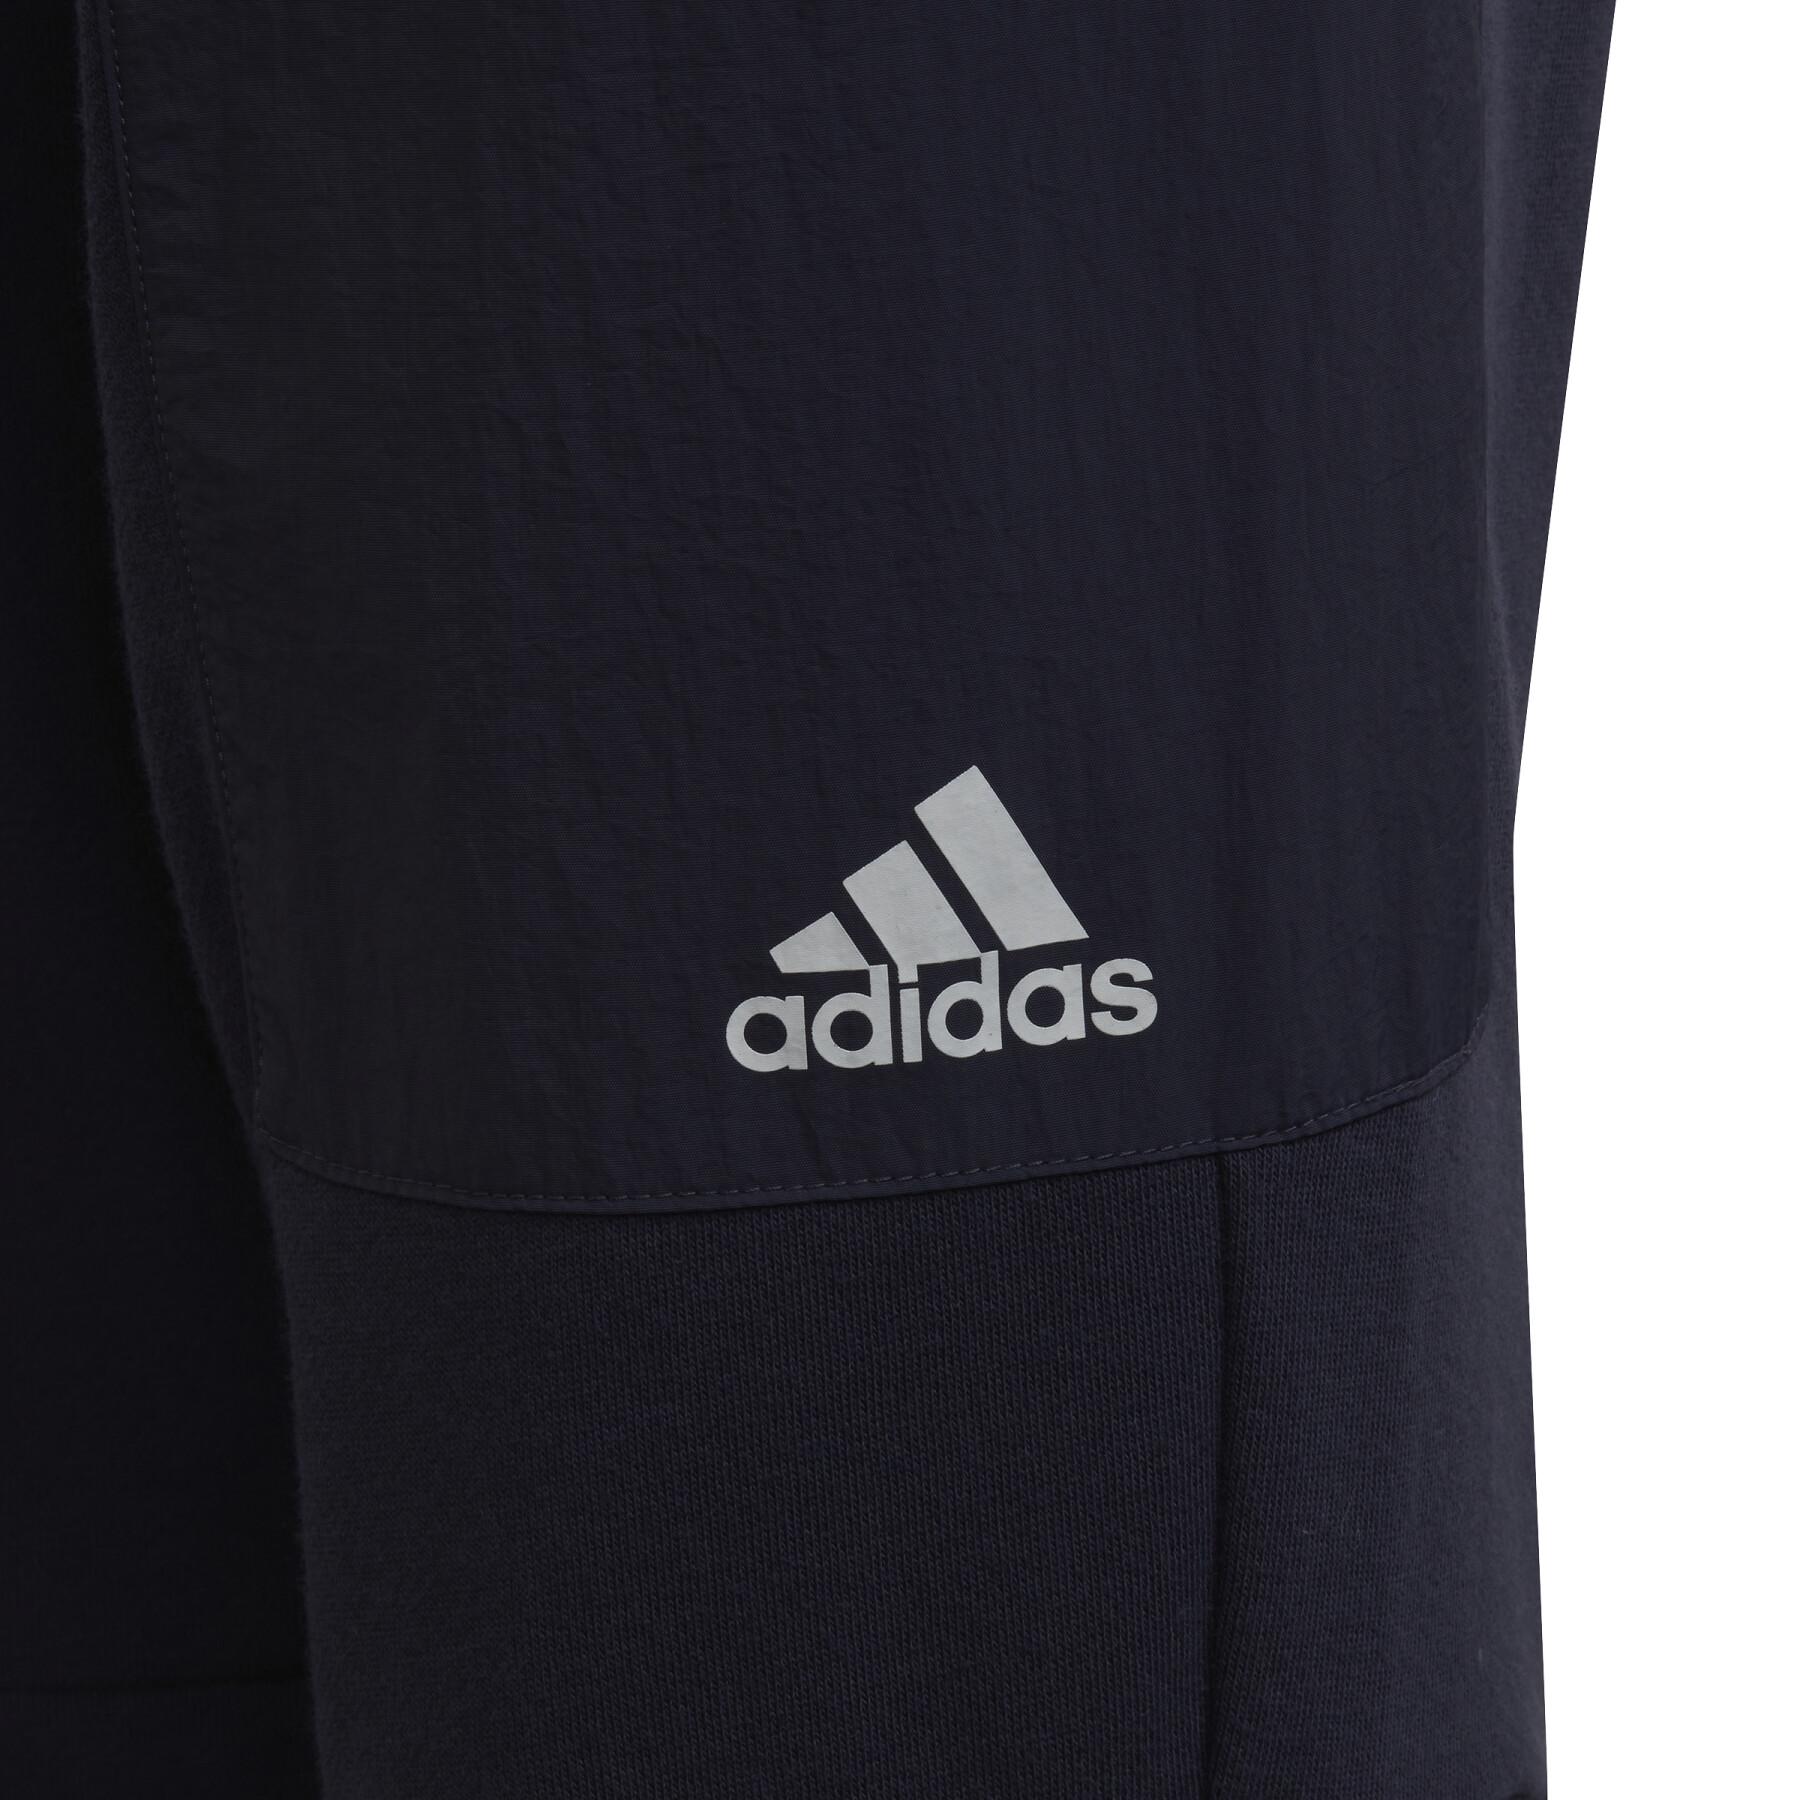 Children's jogging suit adidas ARKD3 Pocket - adidas - Training Pants ...